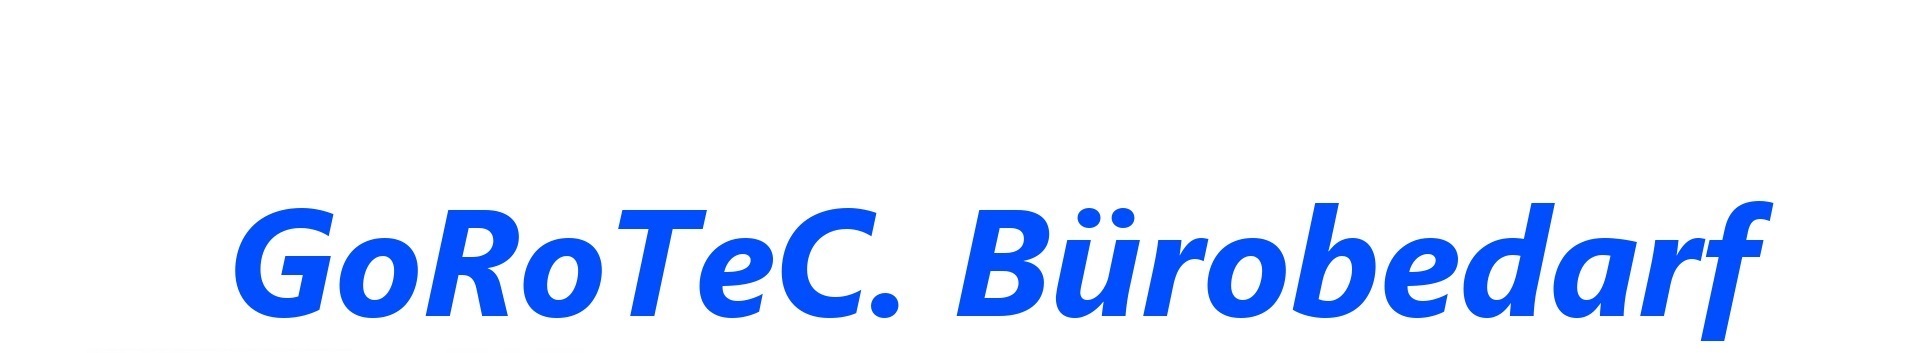 Gorotec Buerobedarf Flensburg -Logo